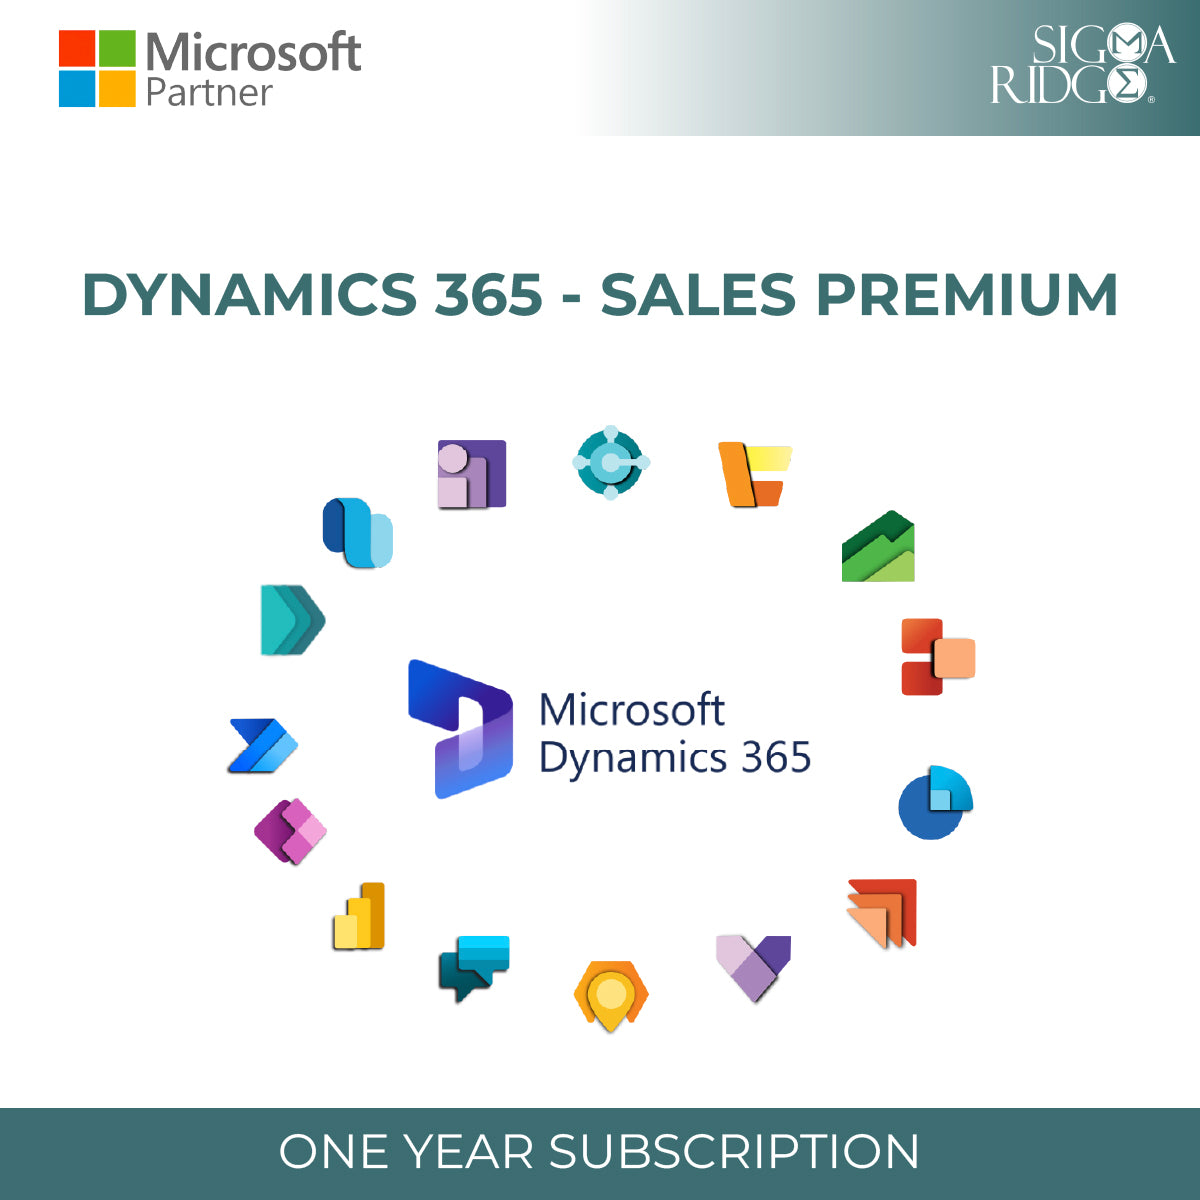 Dynamics 365 Sales Premium